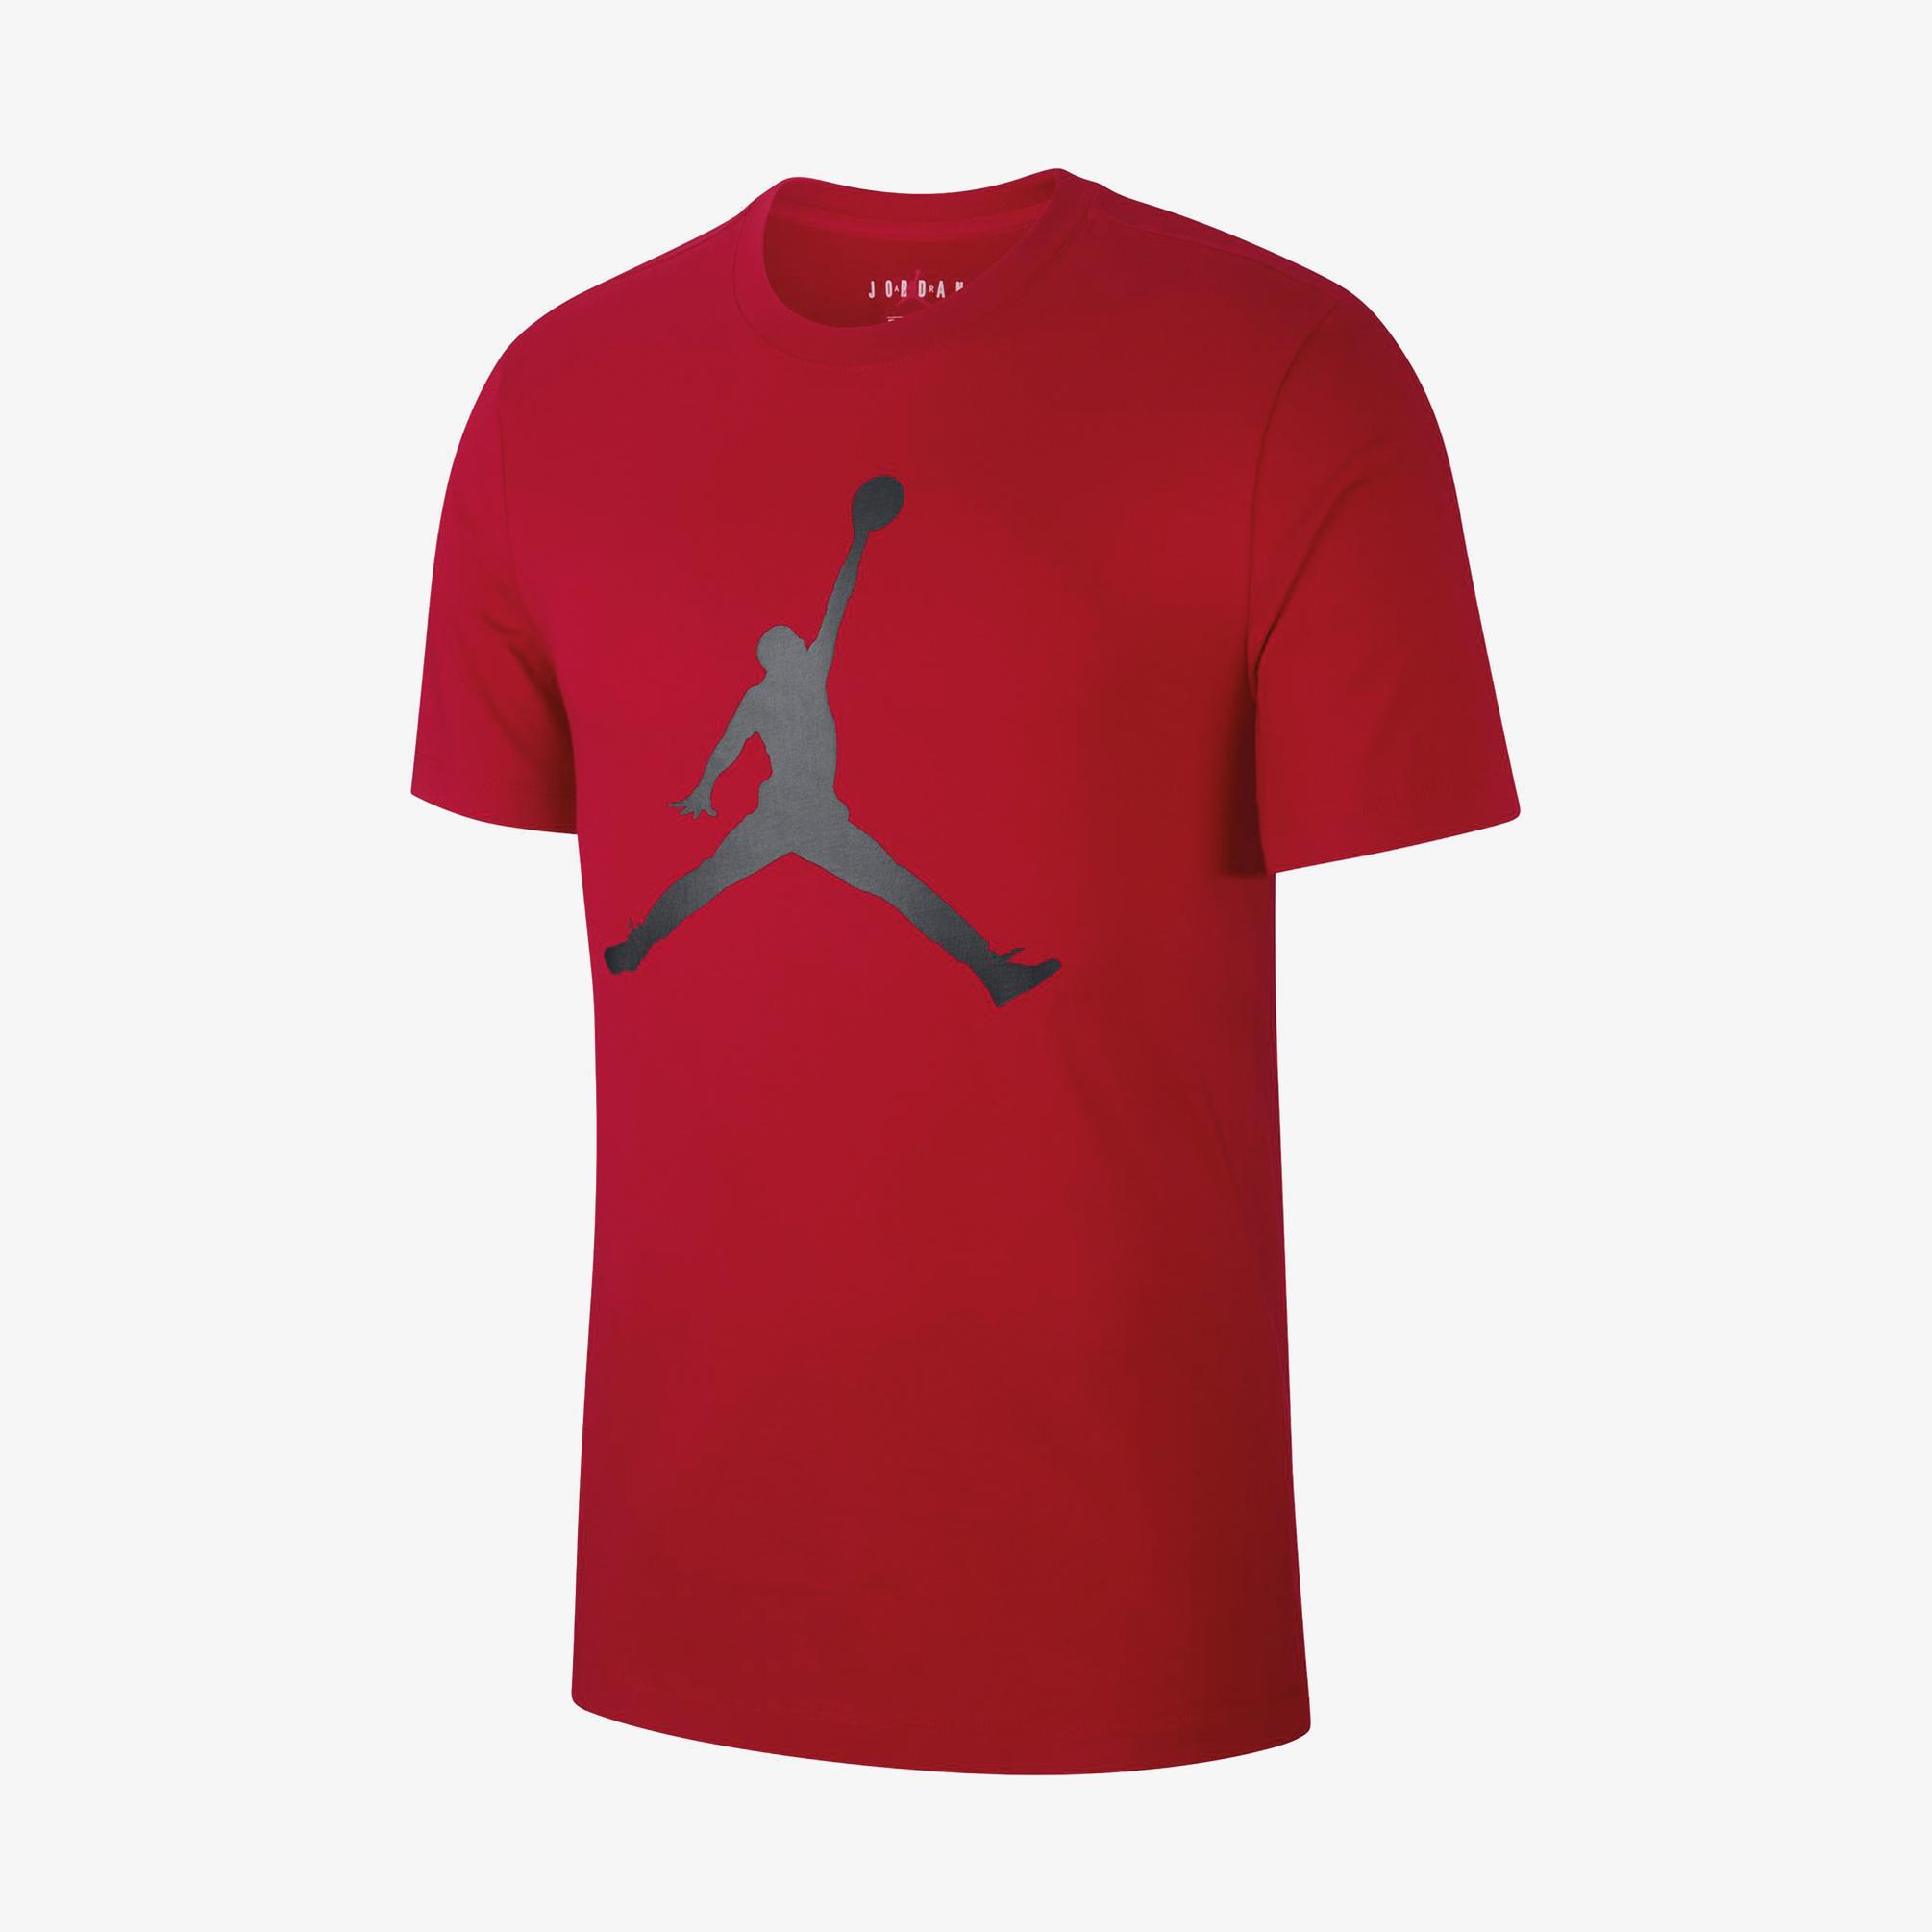  Jordan Jumpman Crew Erkek Kırmızı T-Shirt